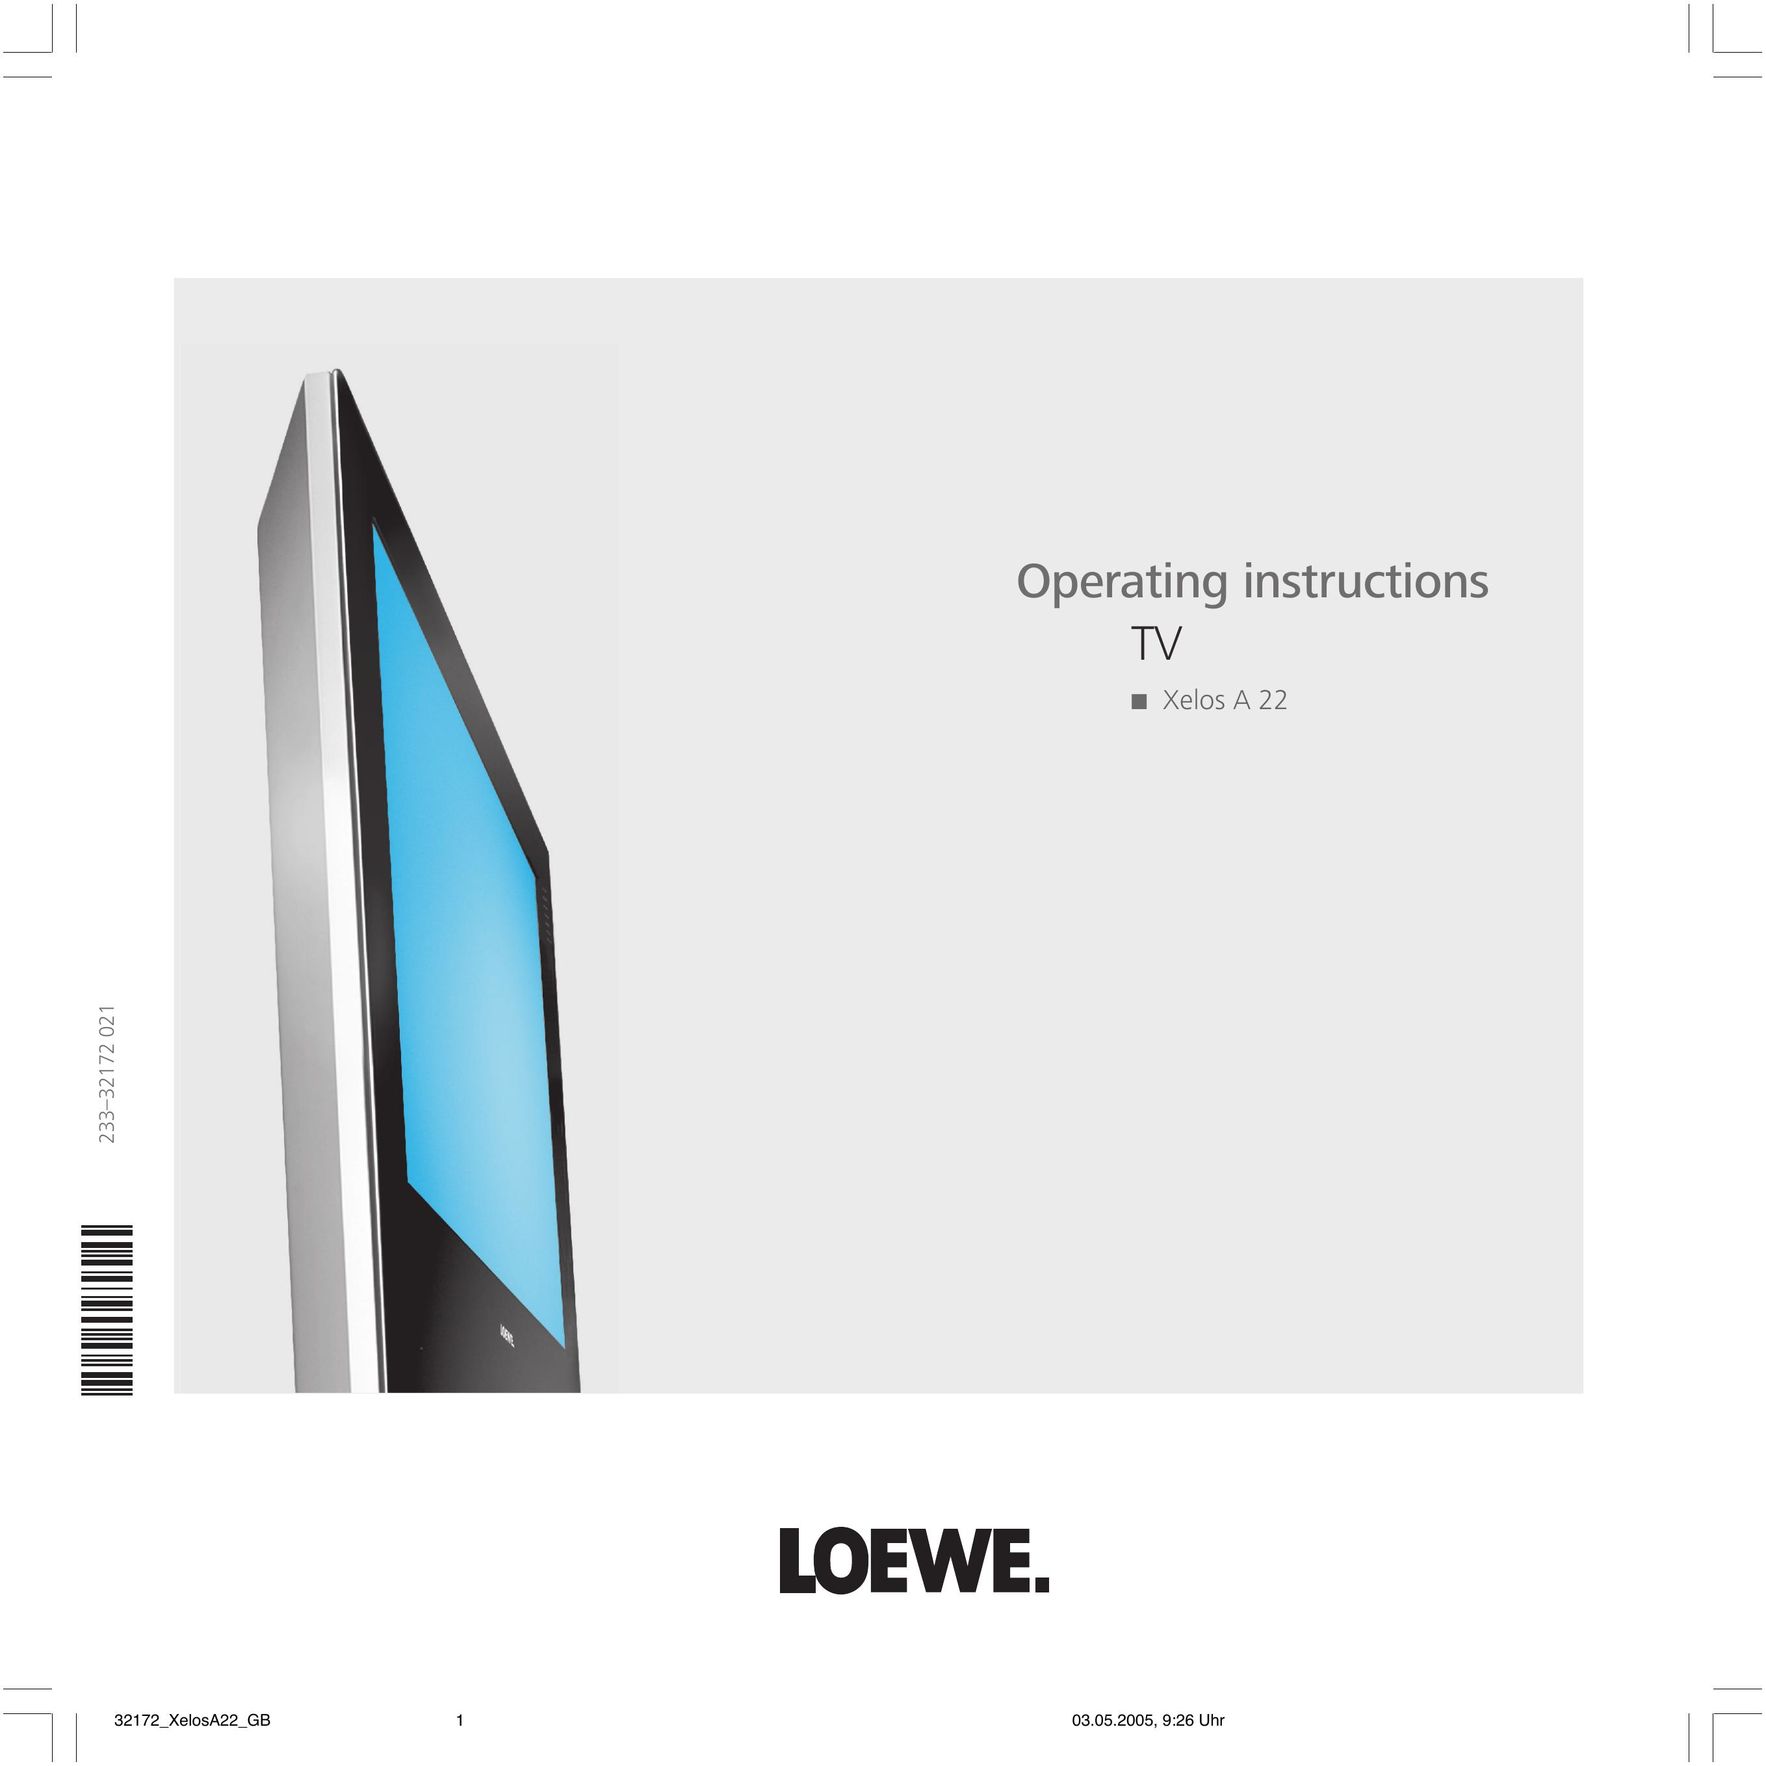 Loewe A 22 Flat Panel Television User Manual